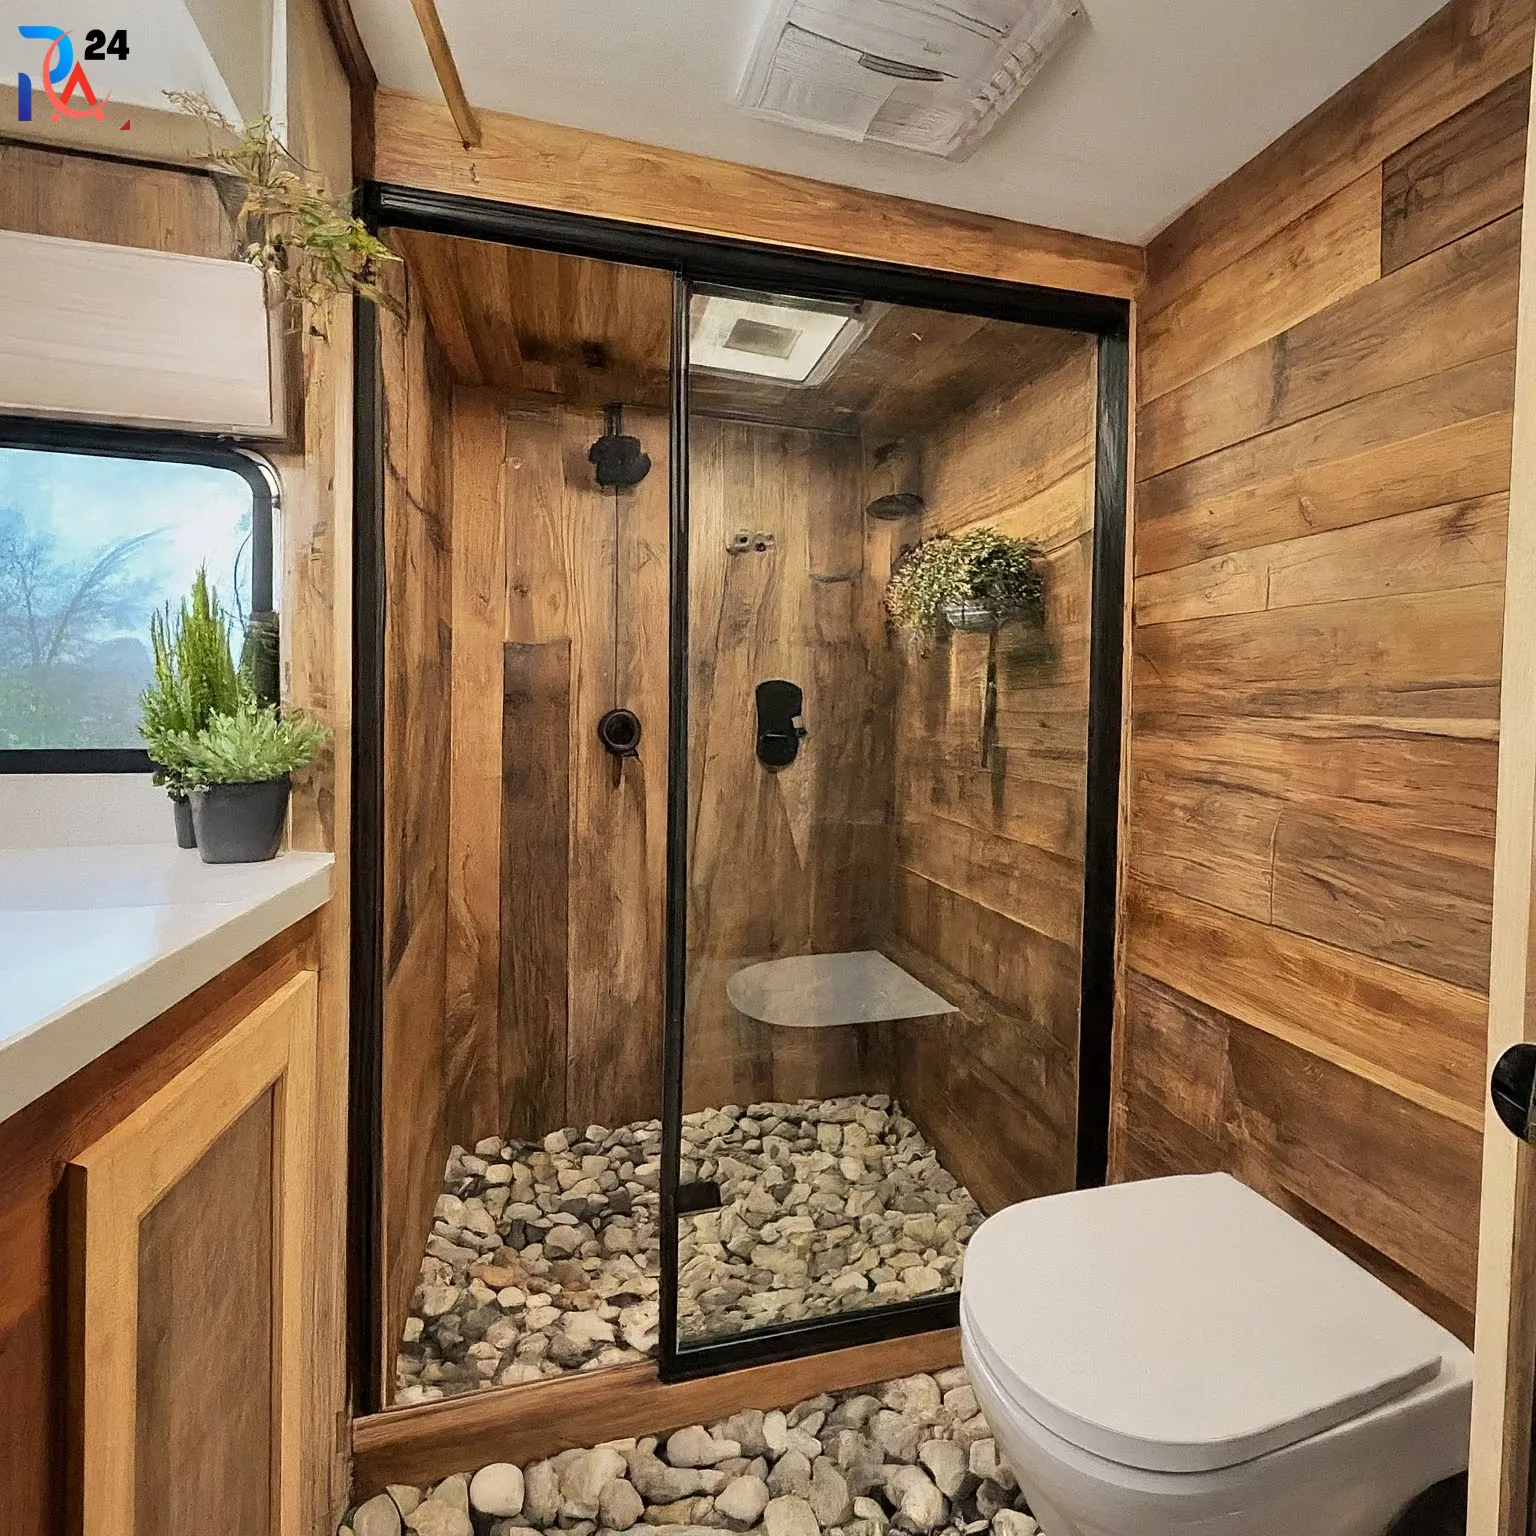 camper bathroom ideas71